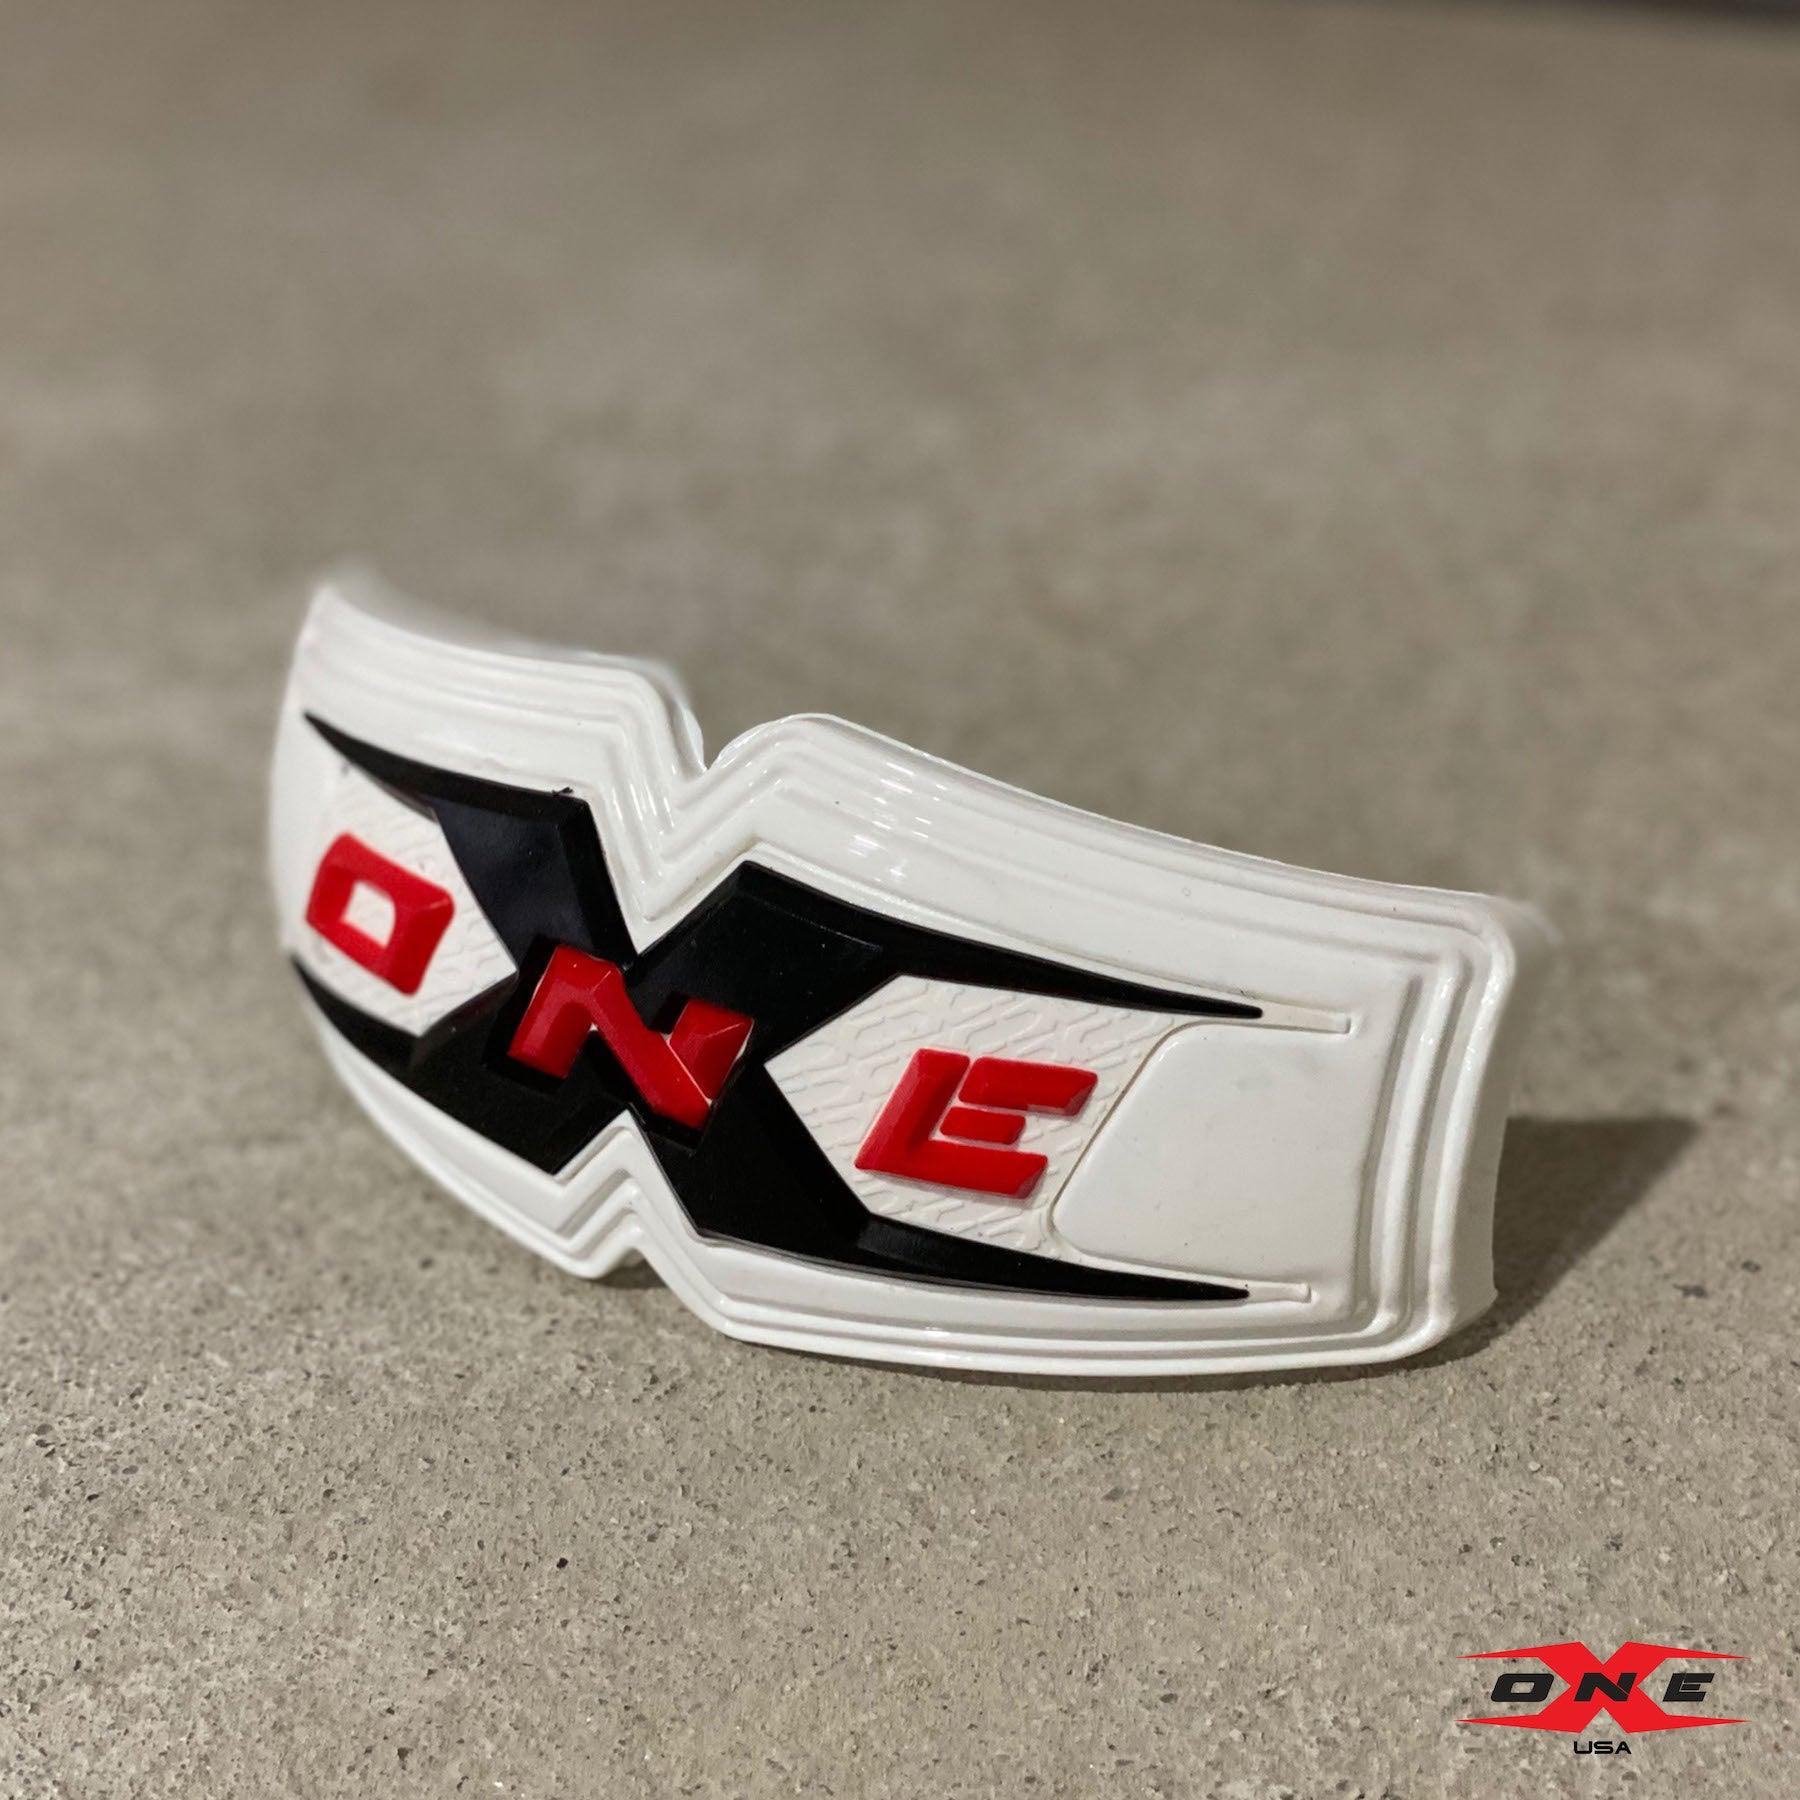 OneX USA RACE SUIT REPLACEMENT SHOULDER GUARD - WHITE - OneX USA